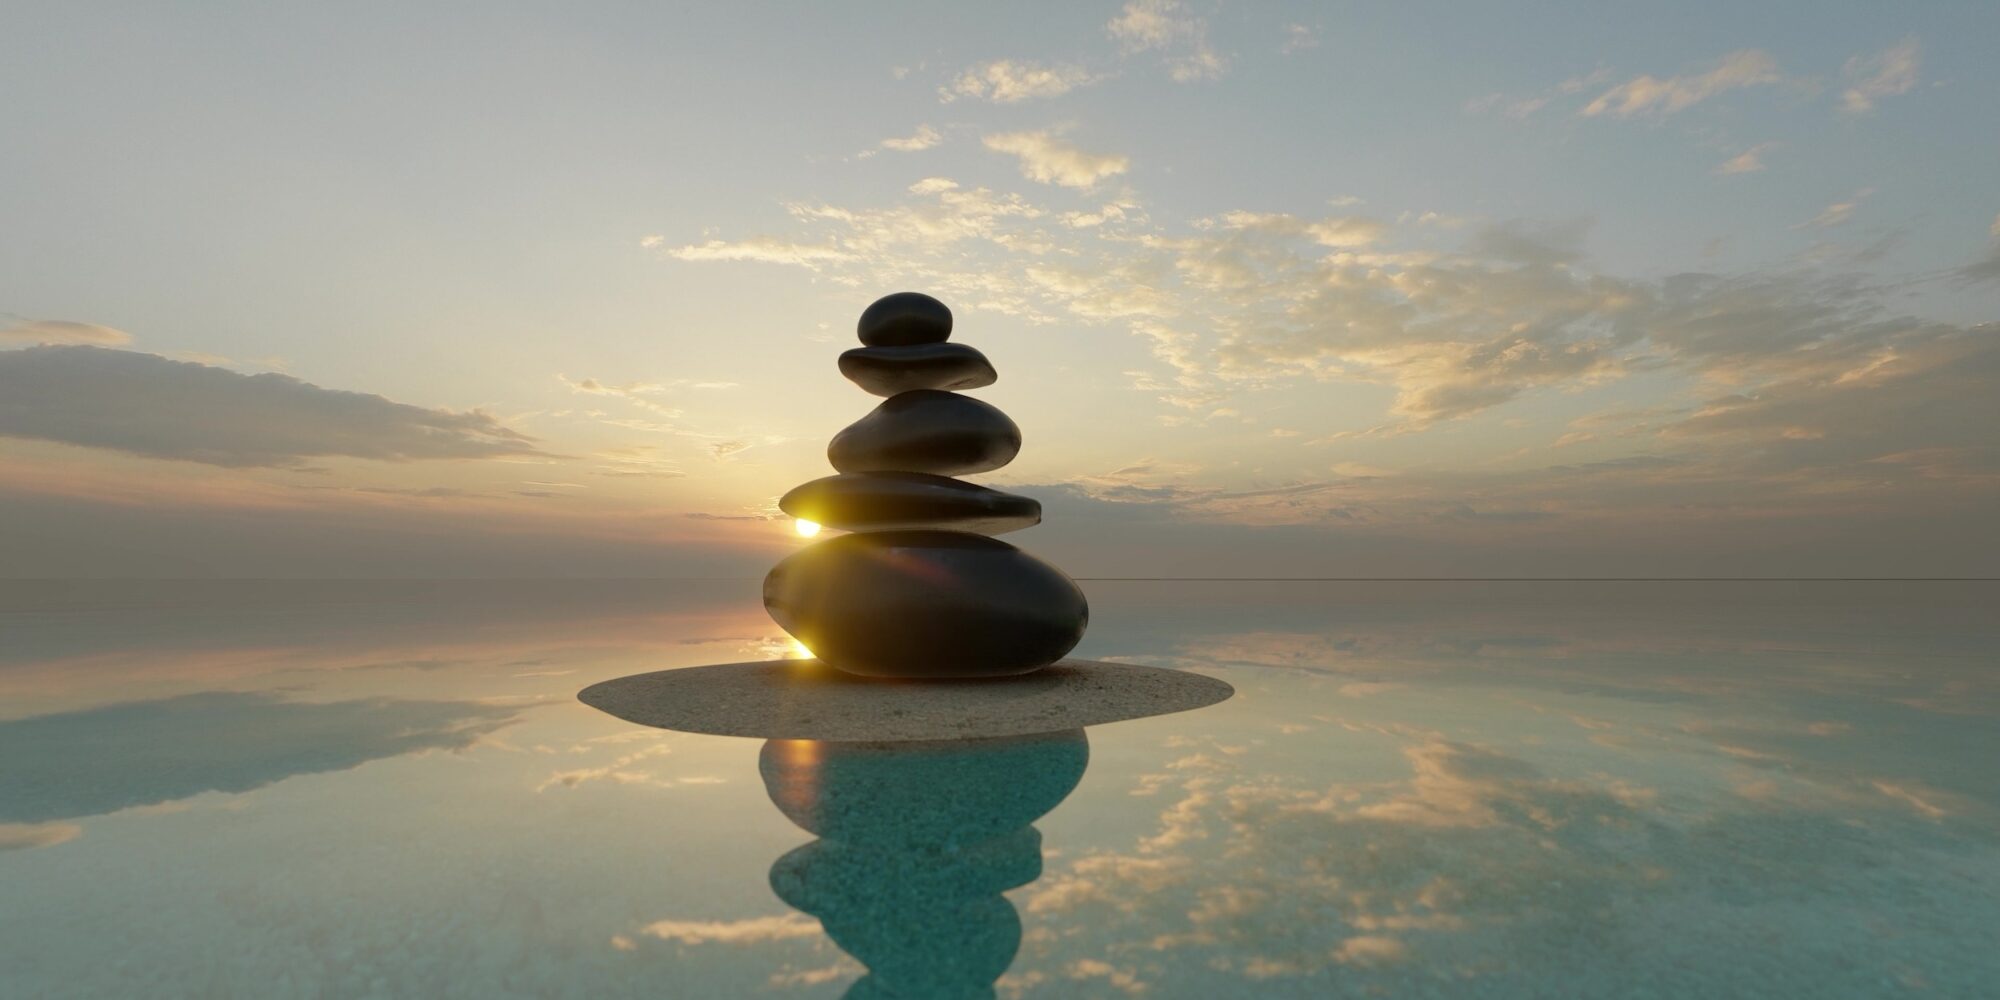 Rock stones balance calmly Water background concept Calm meditation pure mind 3d render